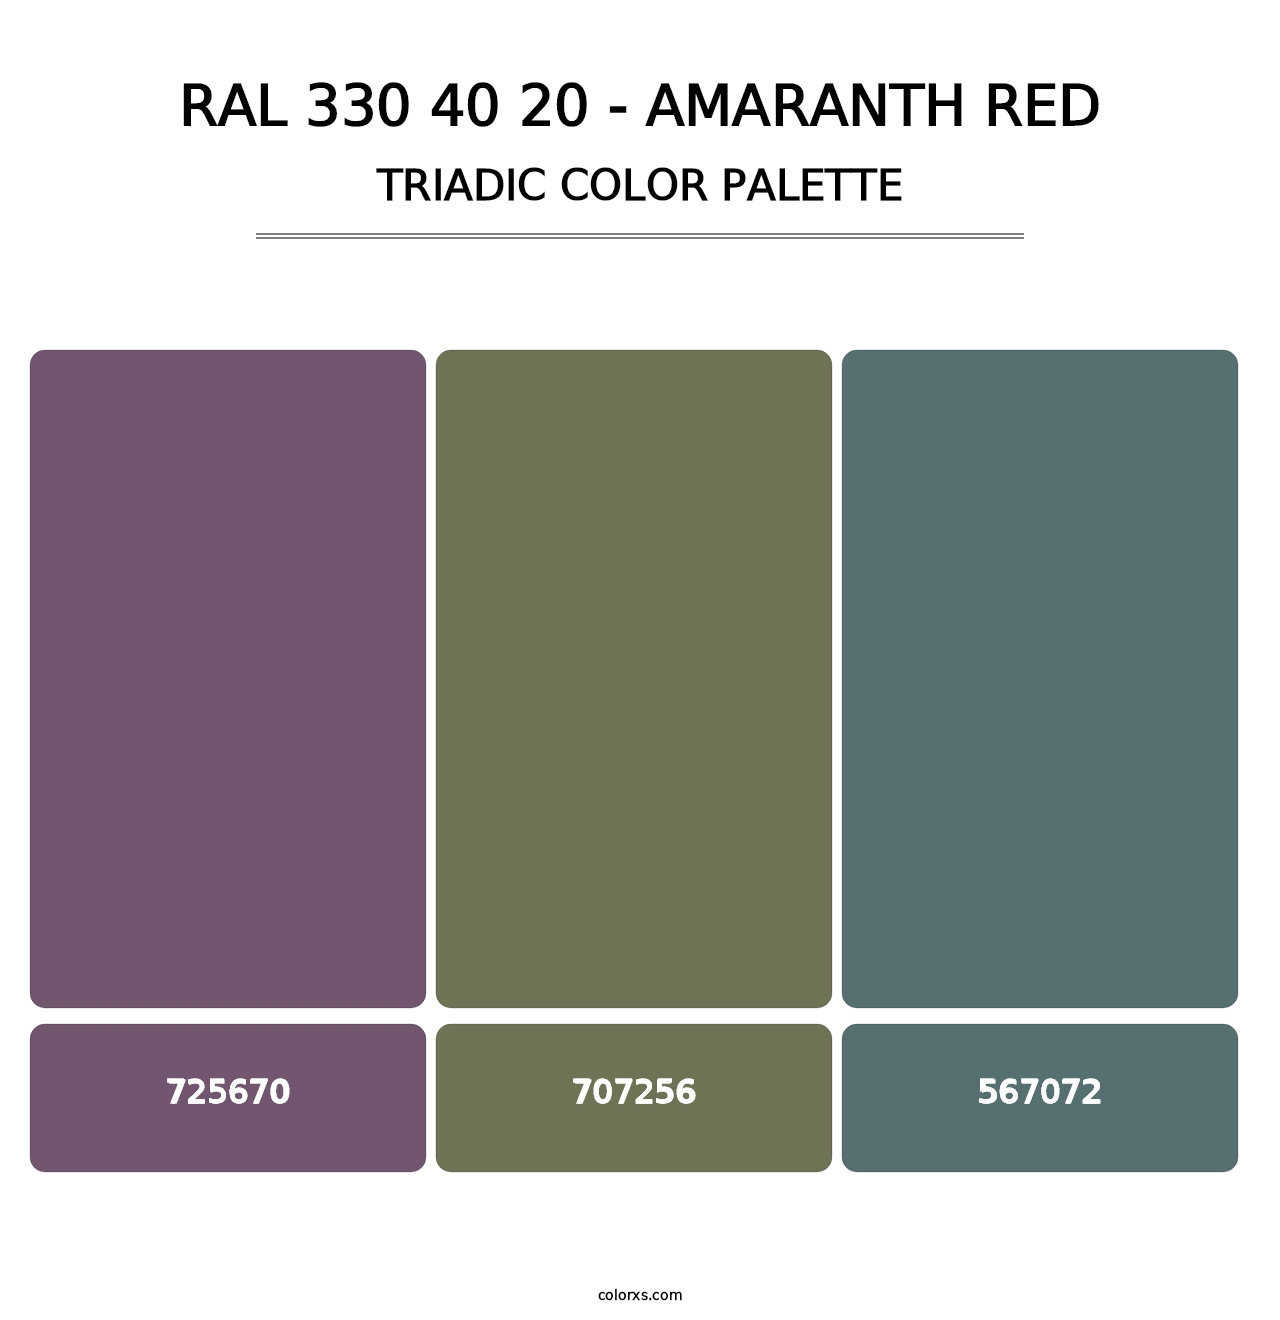 RAL 330 40 20 - Amaranth Red - Triadic Color Palette